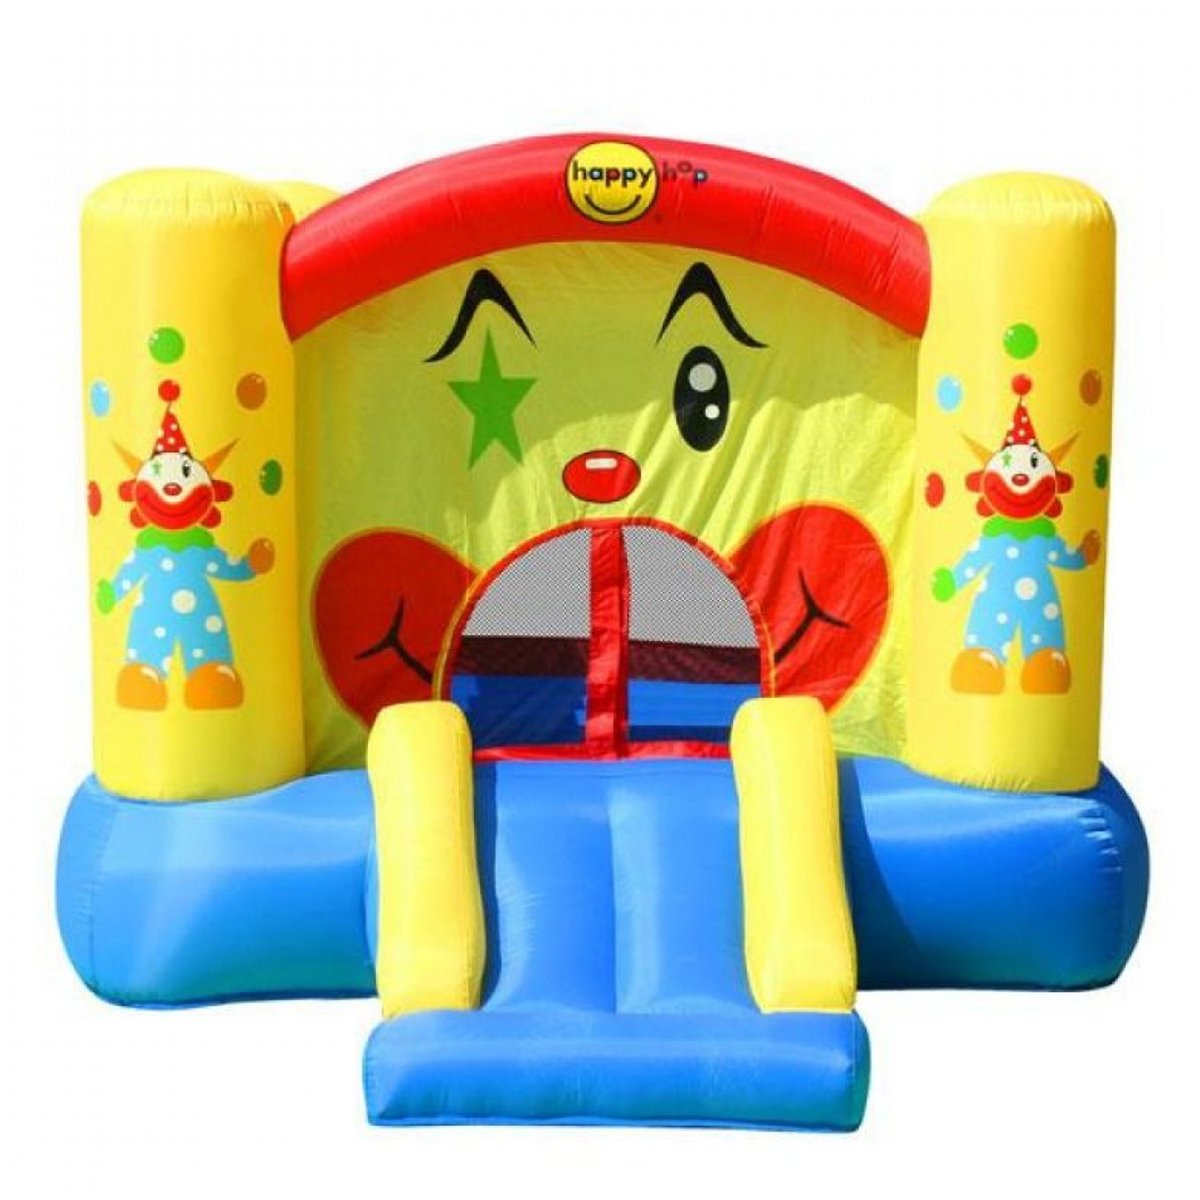 Happyhop Clown S&H Bouncer 9201